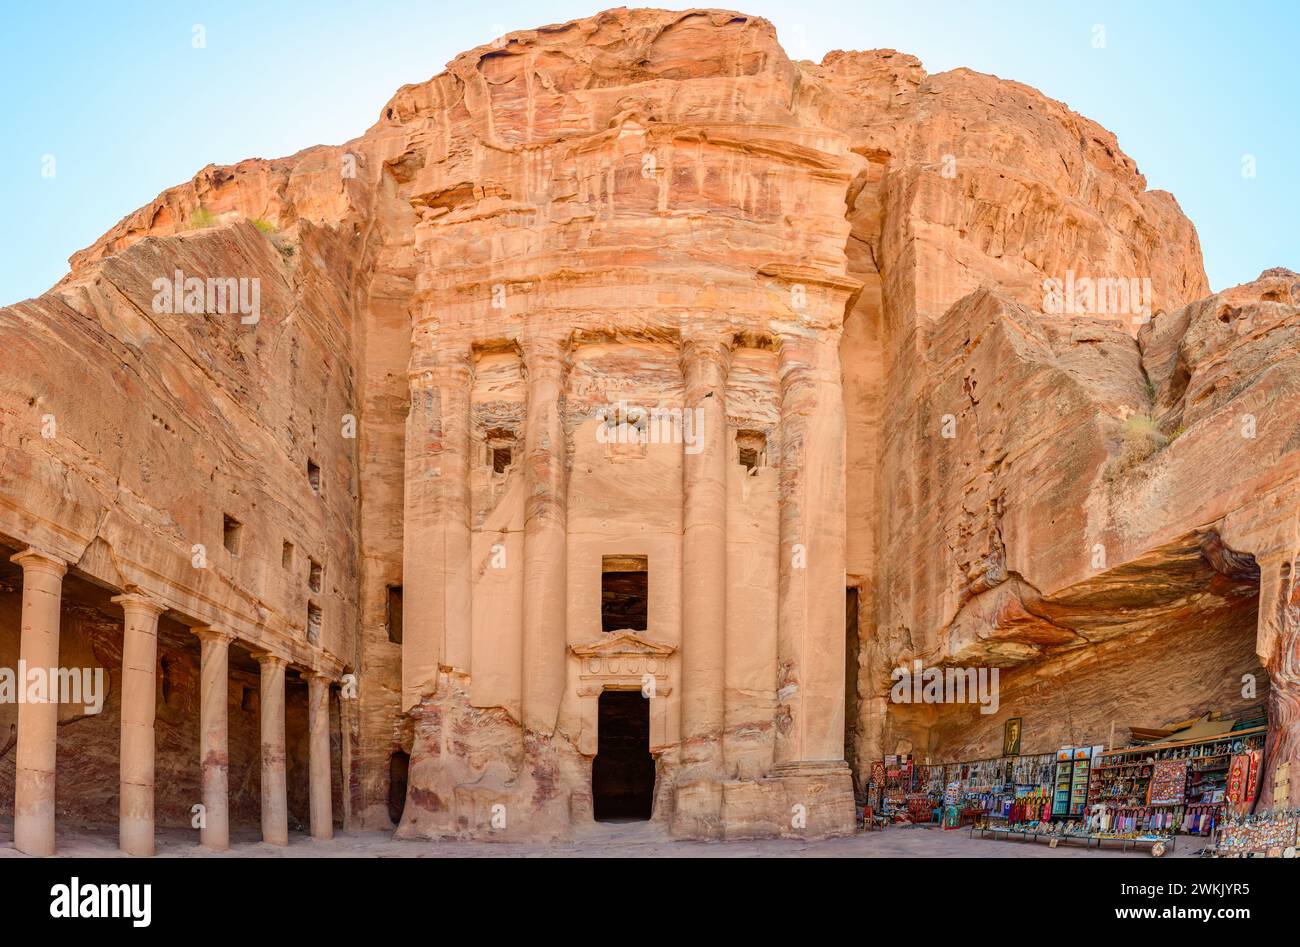 Petra, Jordan - A view of the Urn Tomb, Petra, UNESCO World Heritage Site, Jordan, Middle East Stock Photo